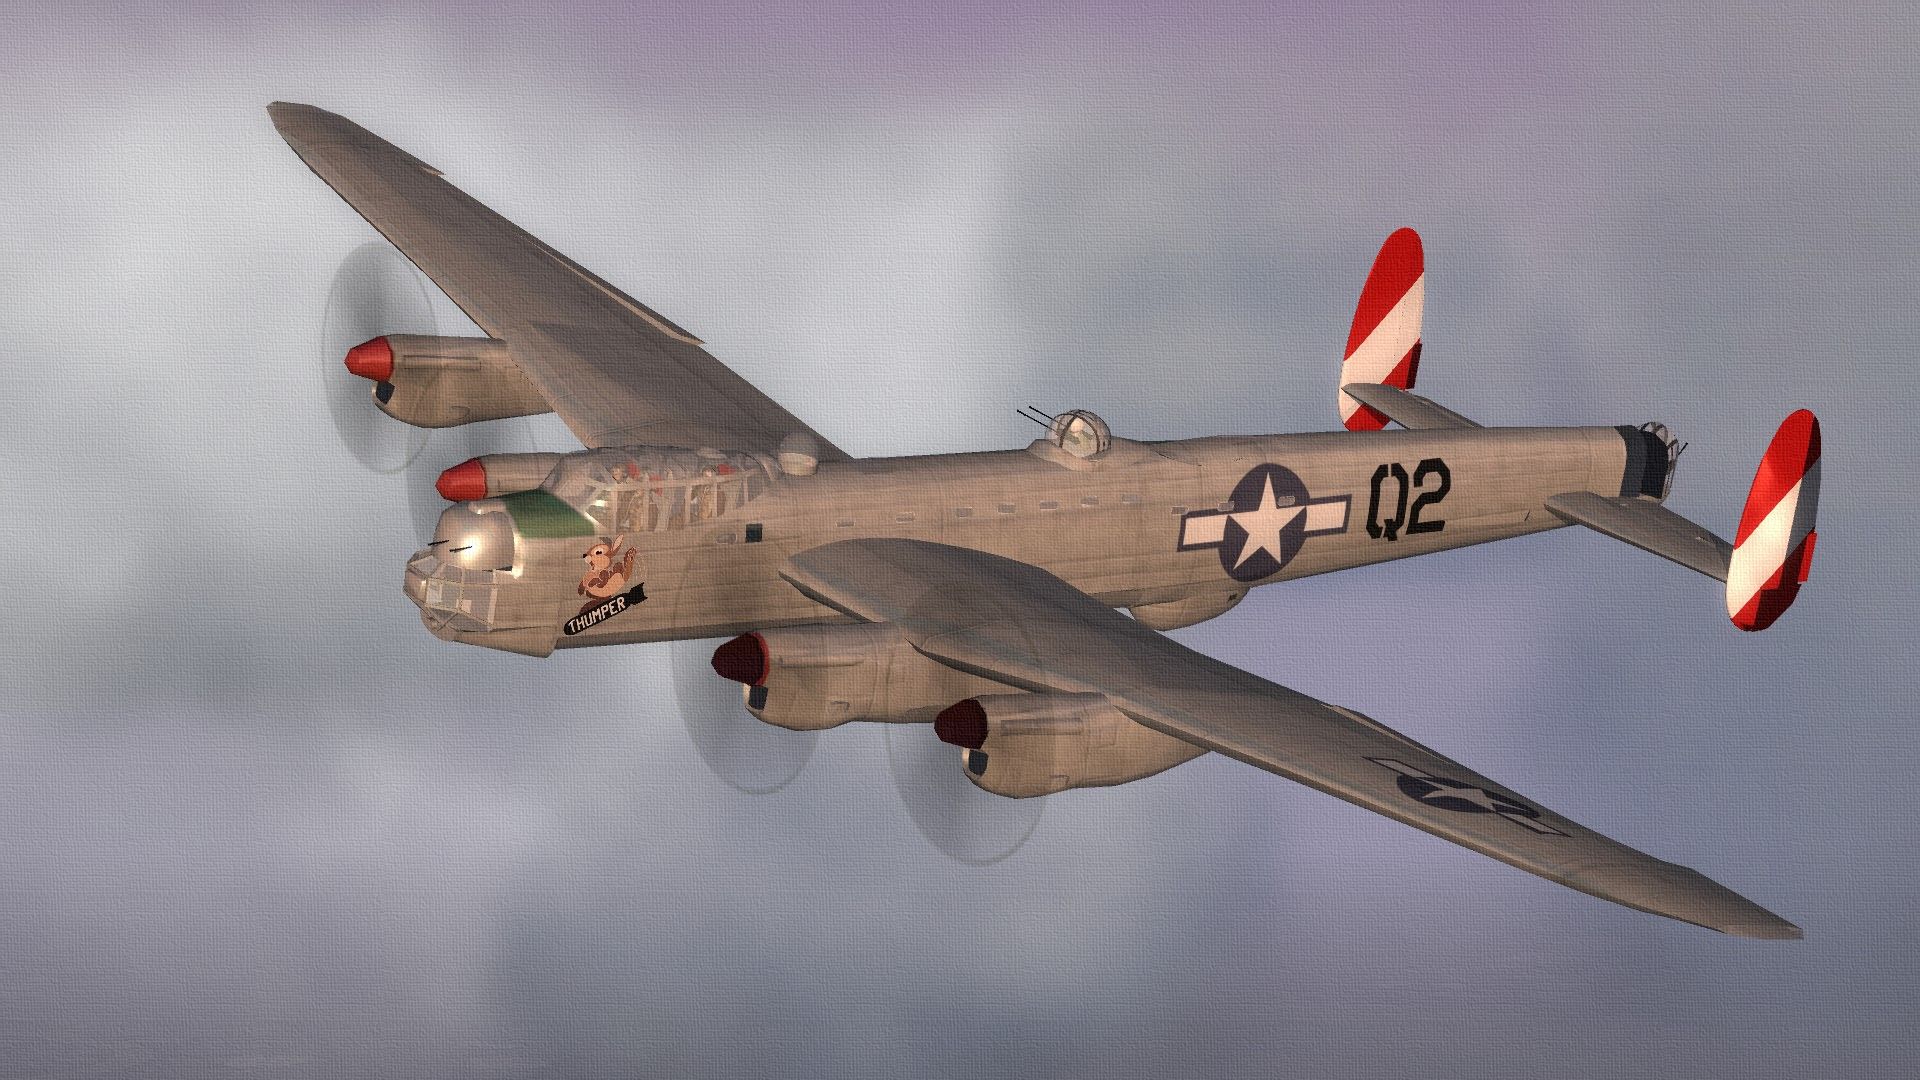 USAAFB-31CLINCOLN01_zps3cb82341.jpg